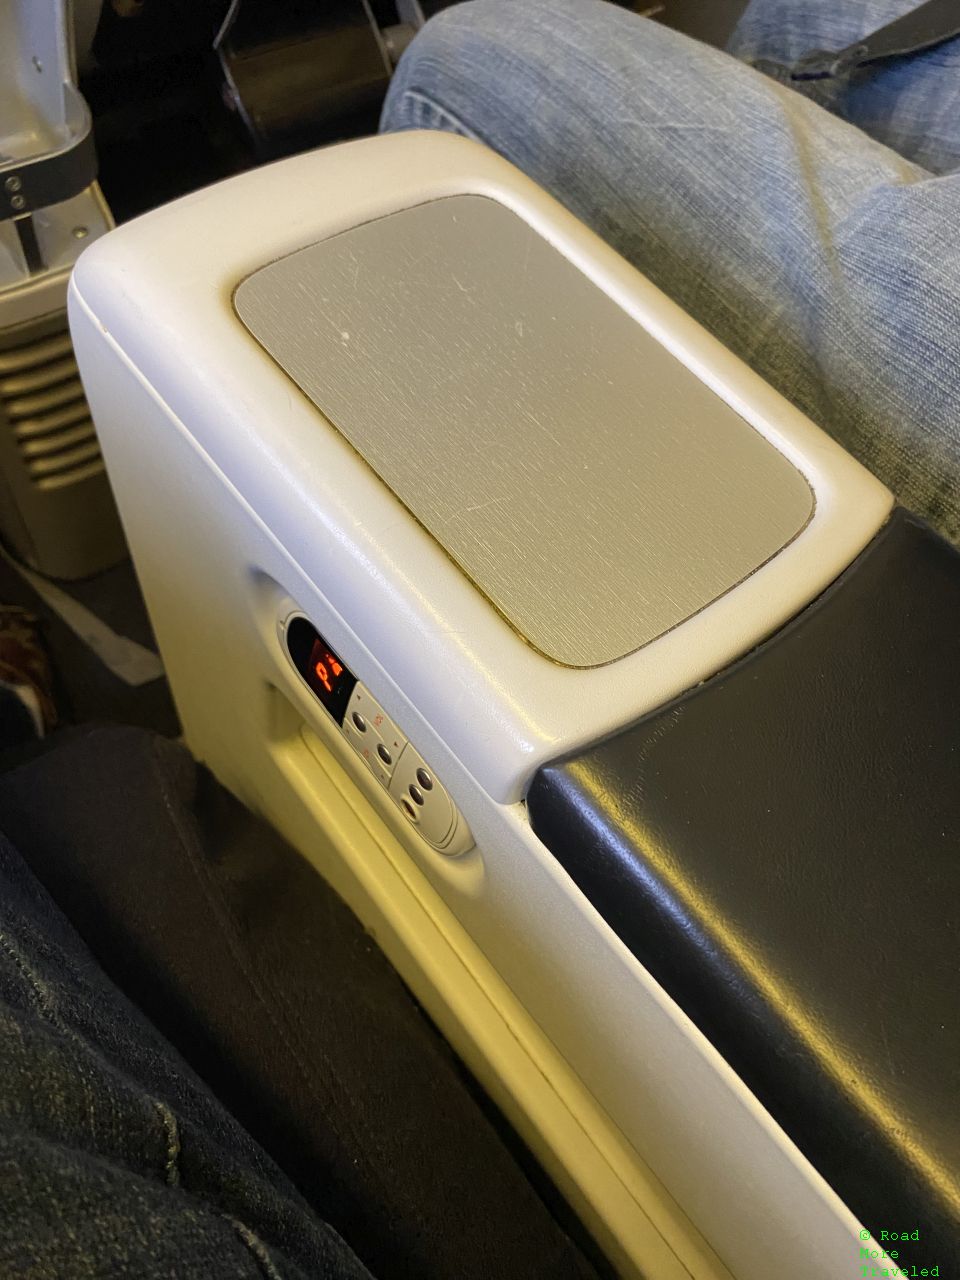 Air France Premium Economy armrest